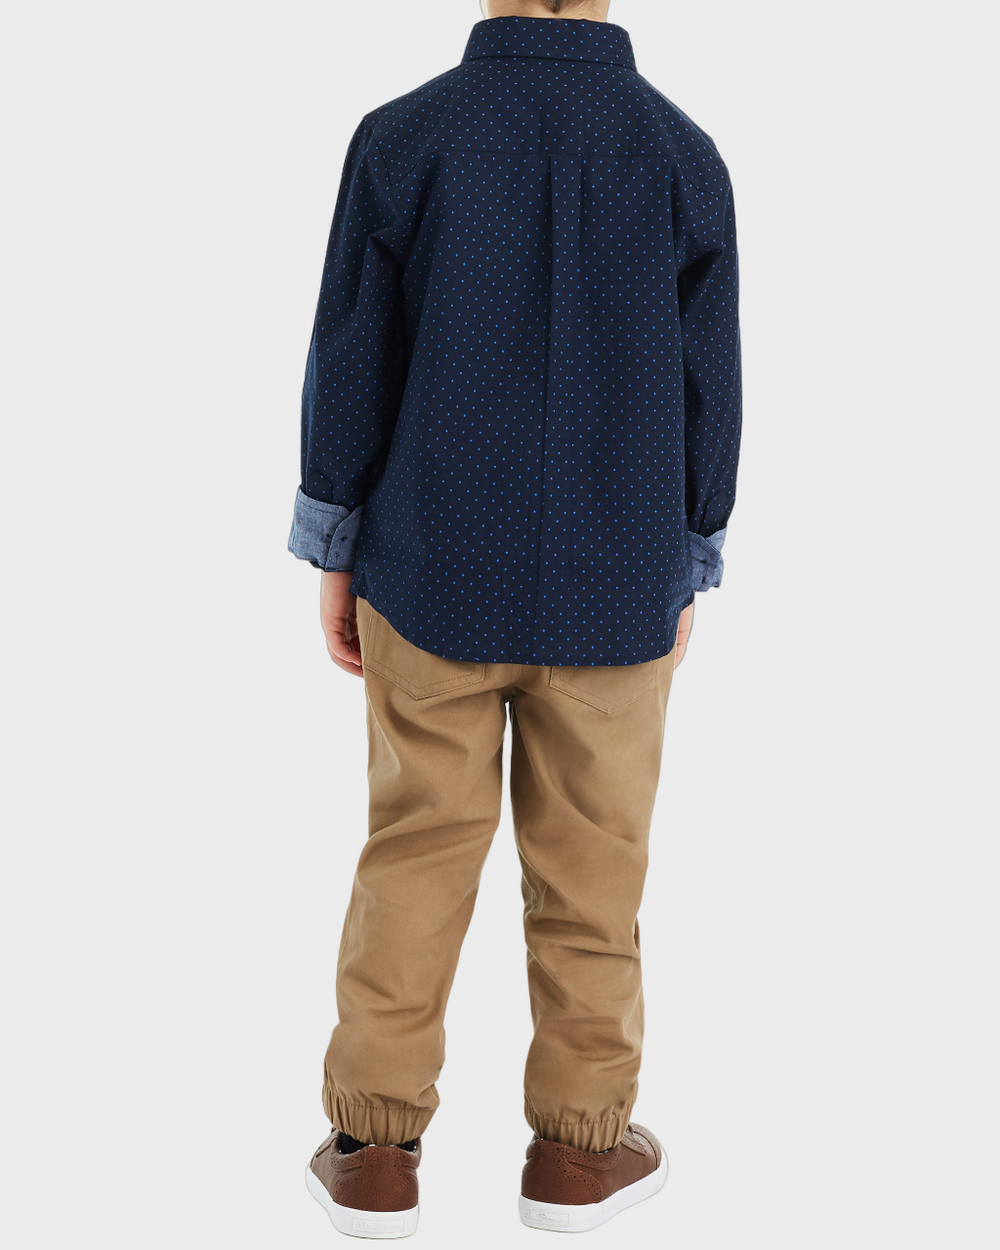 Boys Button-Down Shirt & Pant Set (Sizes 2T-4T)